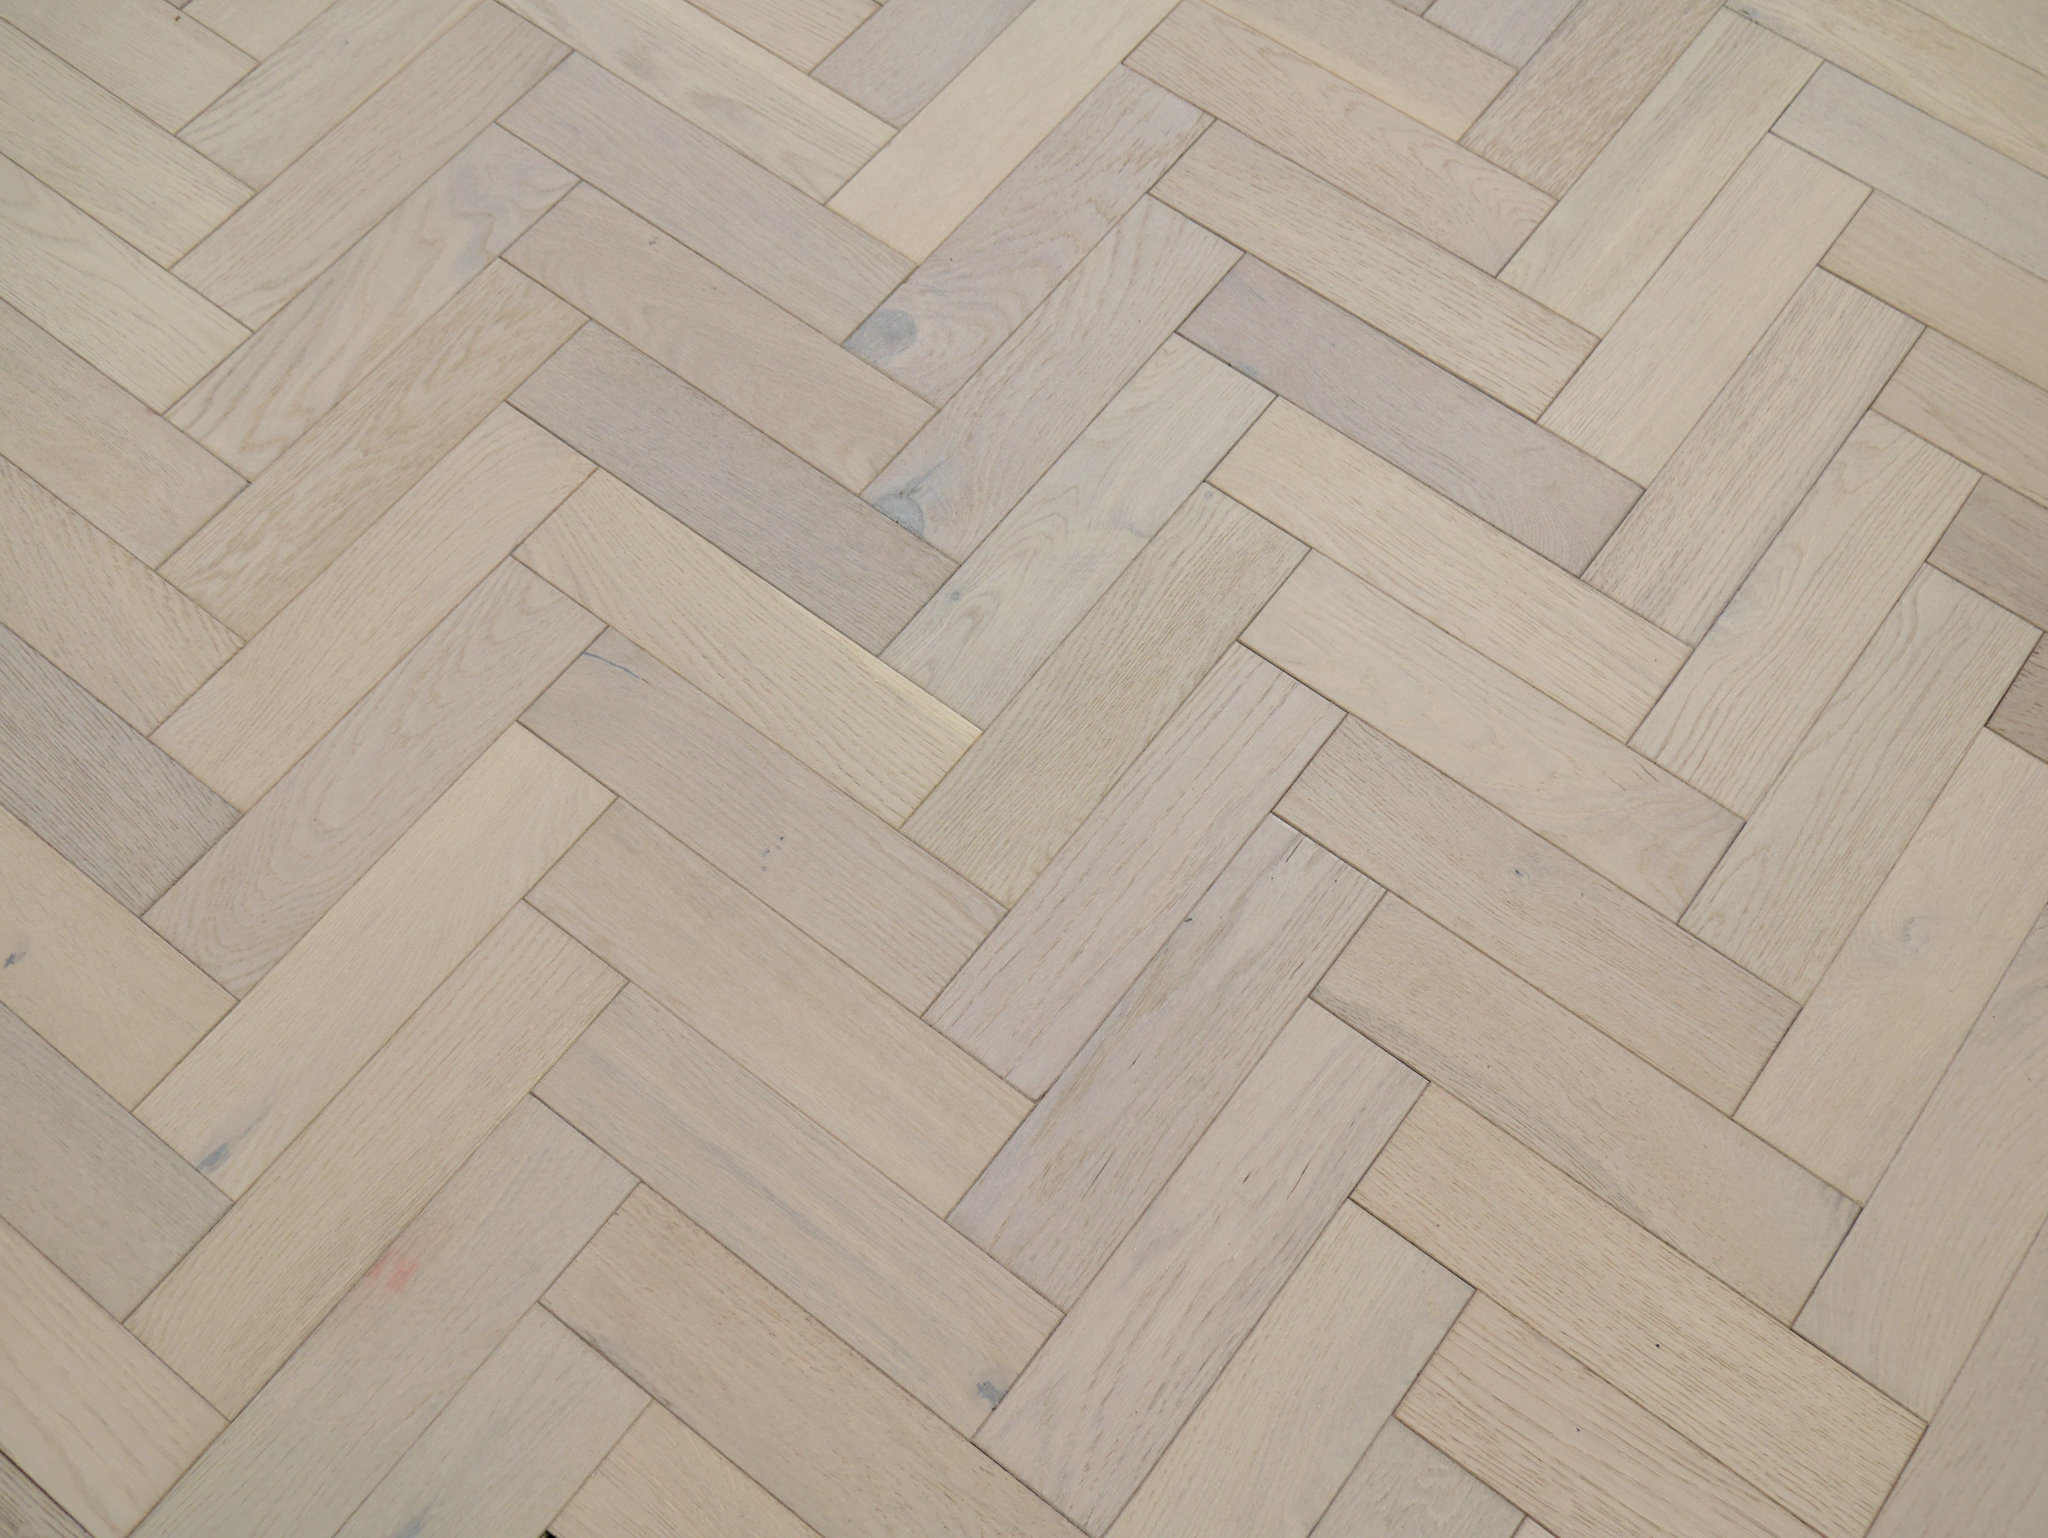 Timbercraft Herringbone Engineered Oak Parquet Flooring, White, Brushed & Oiled, 80x3x300 Mm image